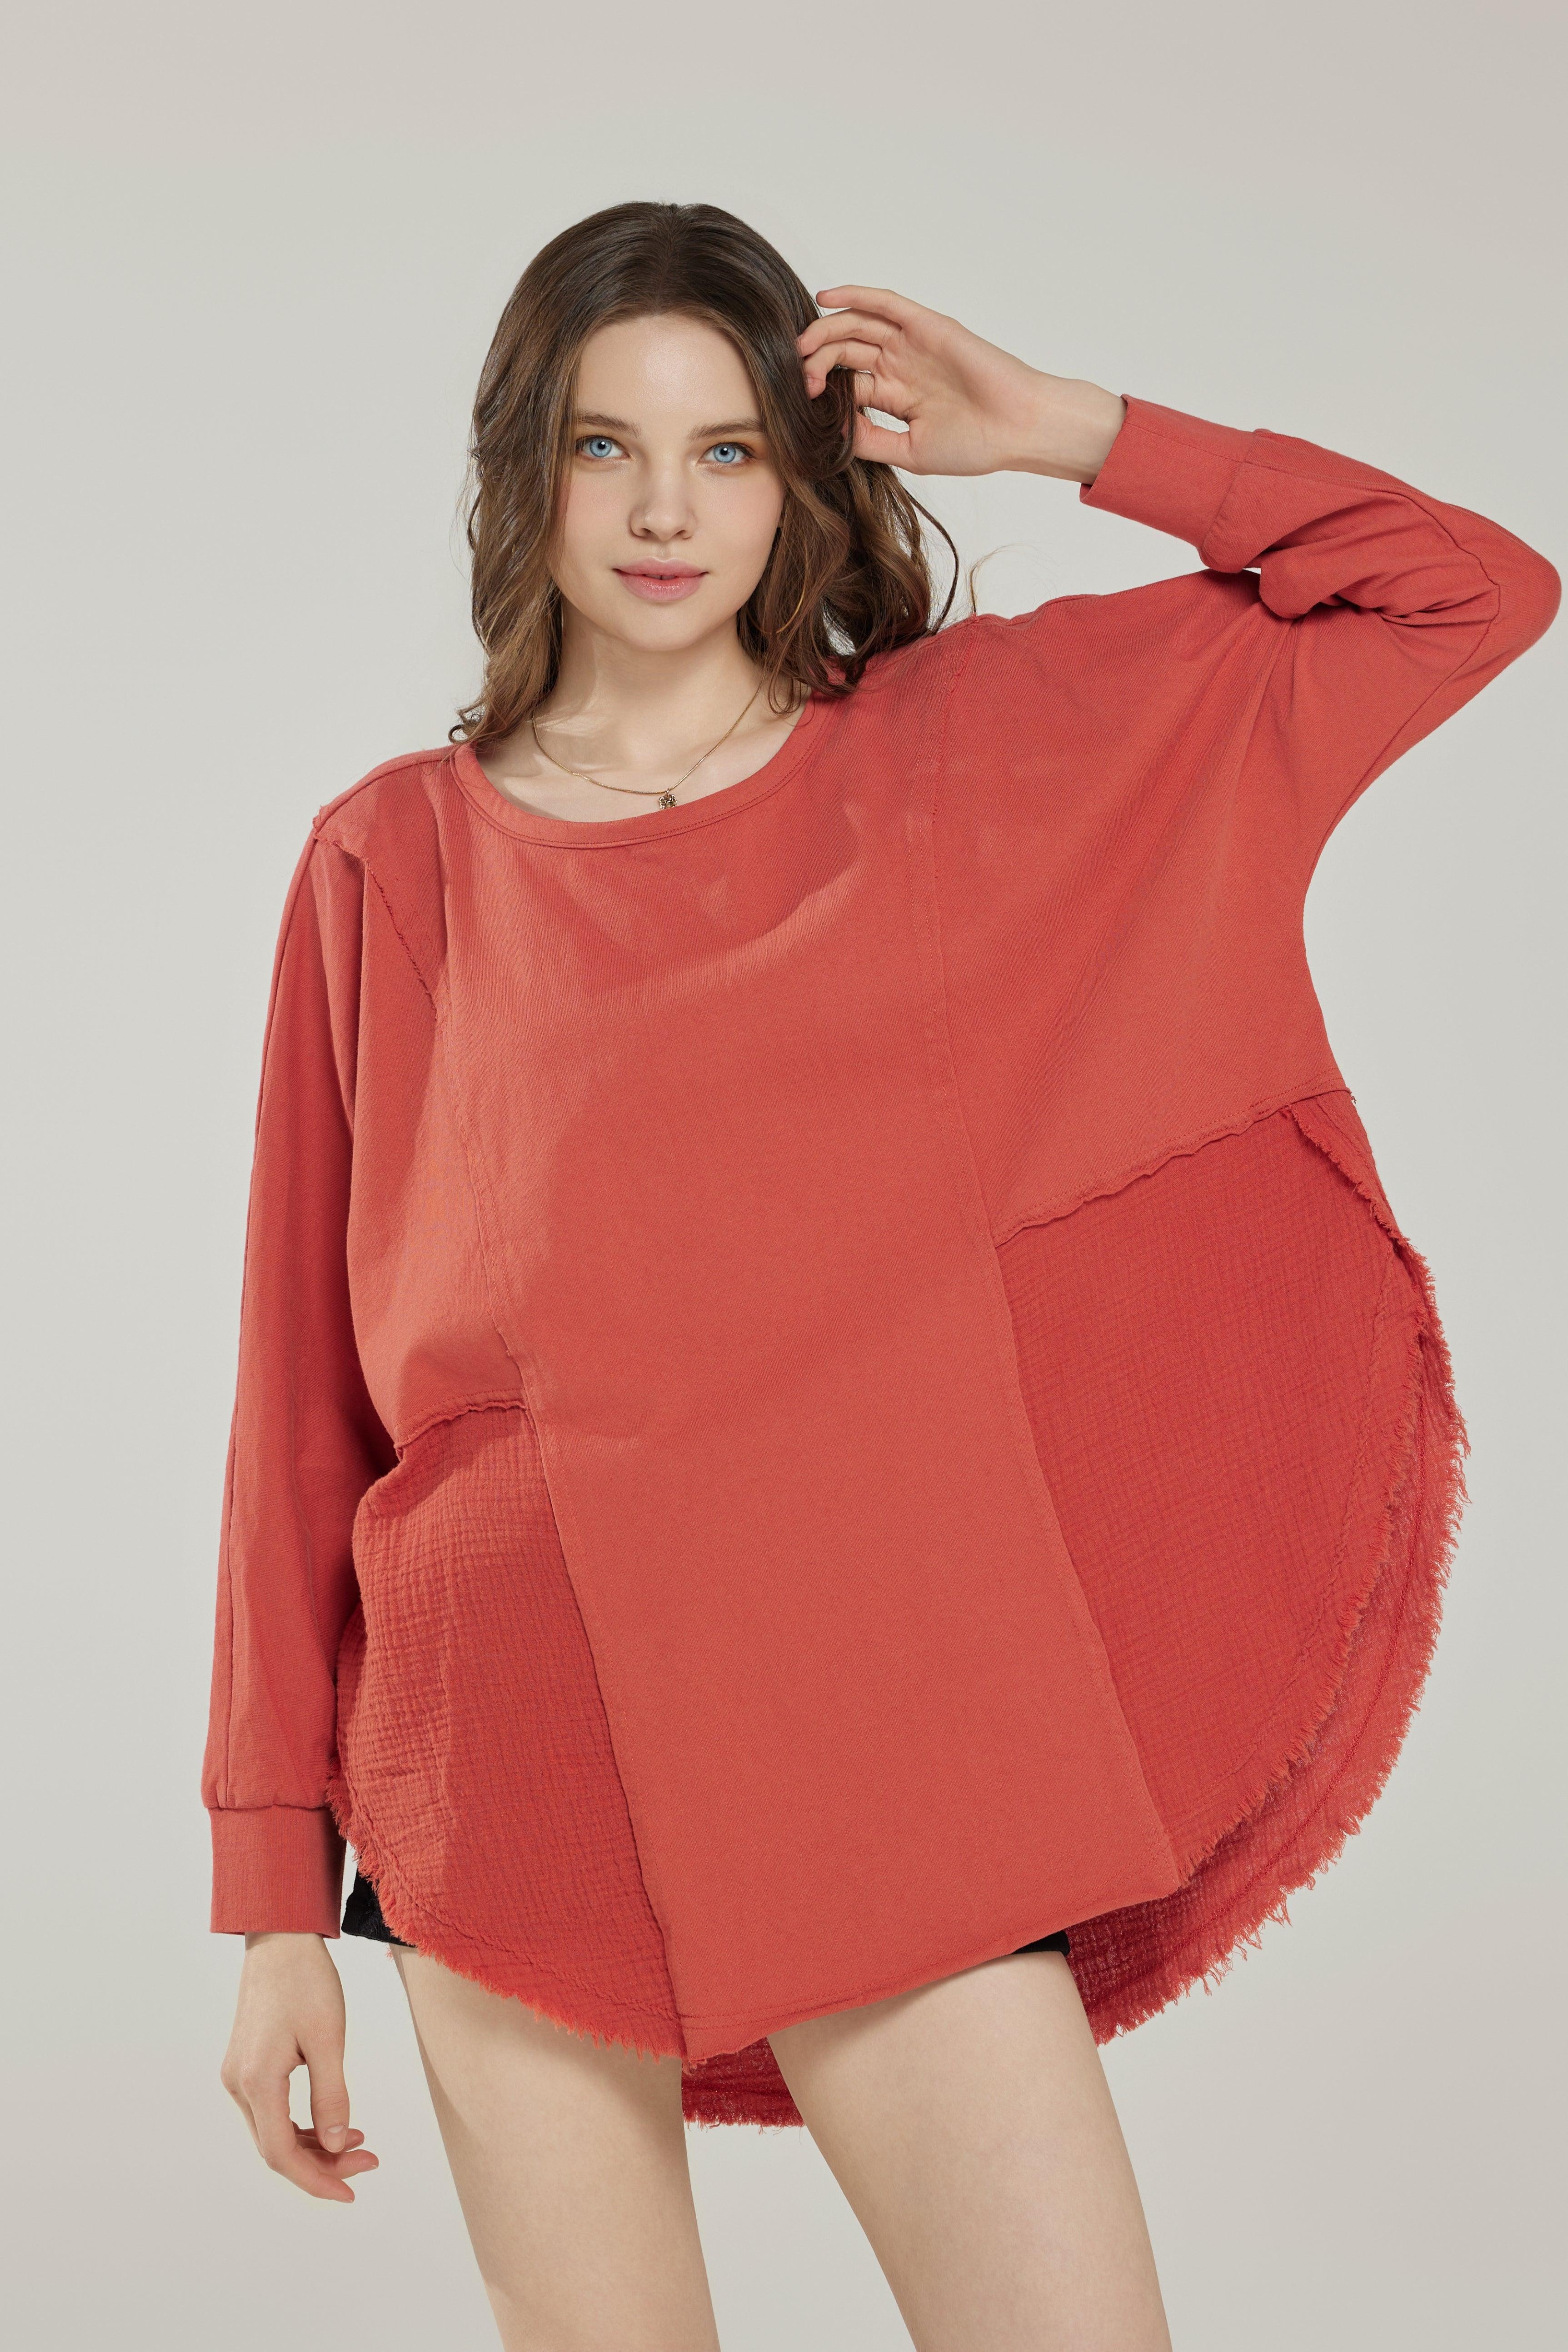 100% Cotton Comfy Oversized Round Side Slit Contrast Top - Terracotta - noflik